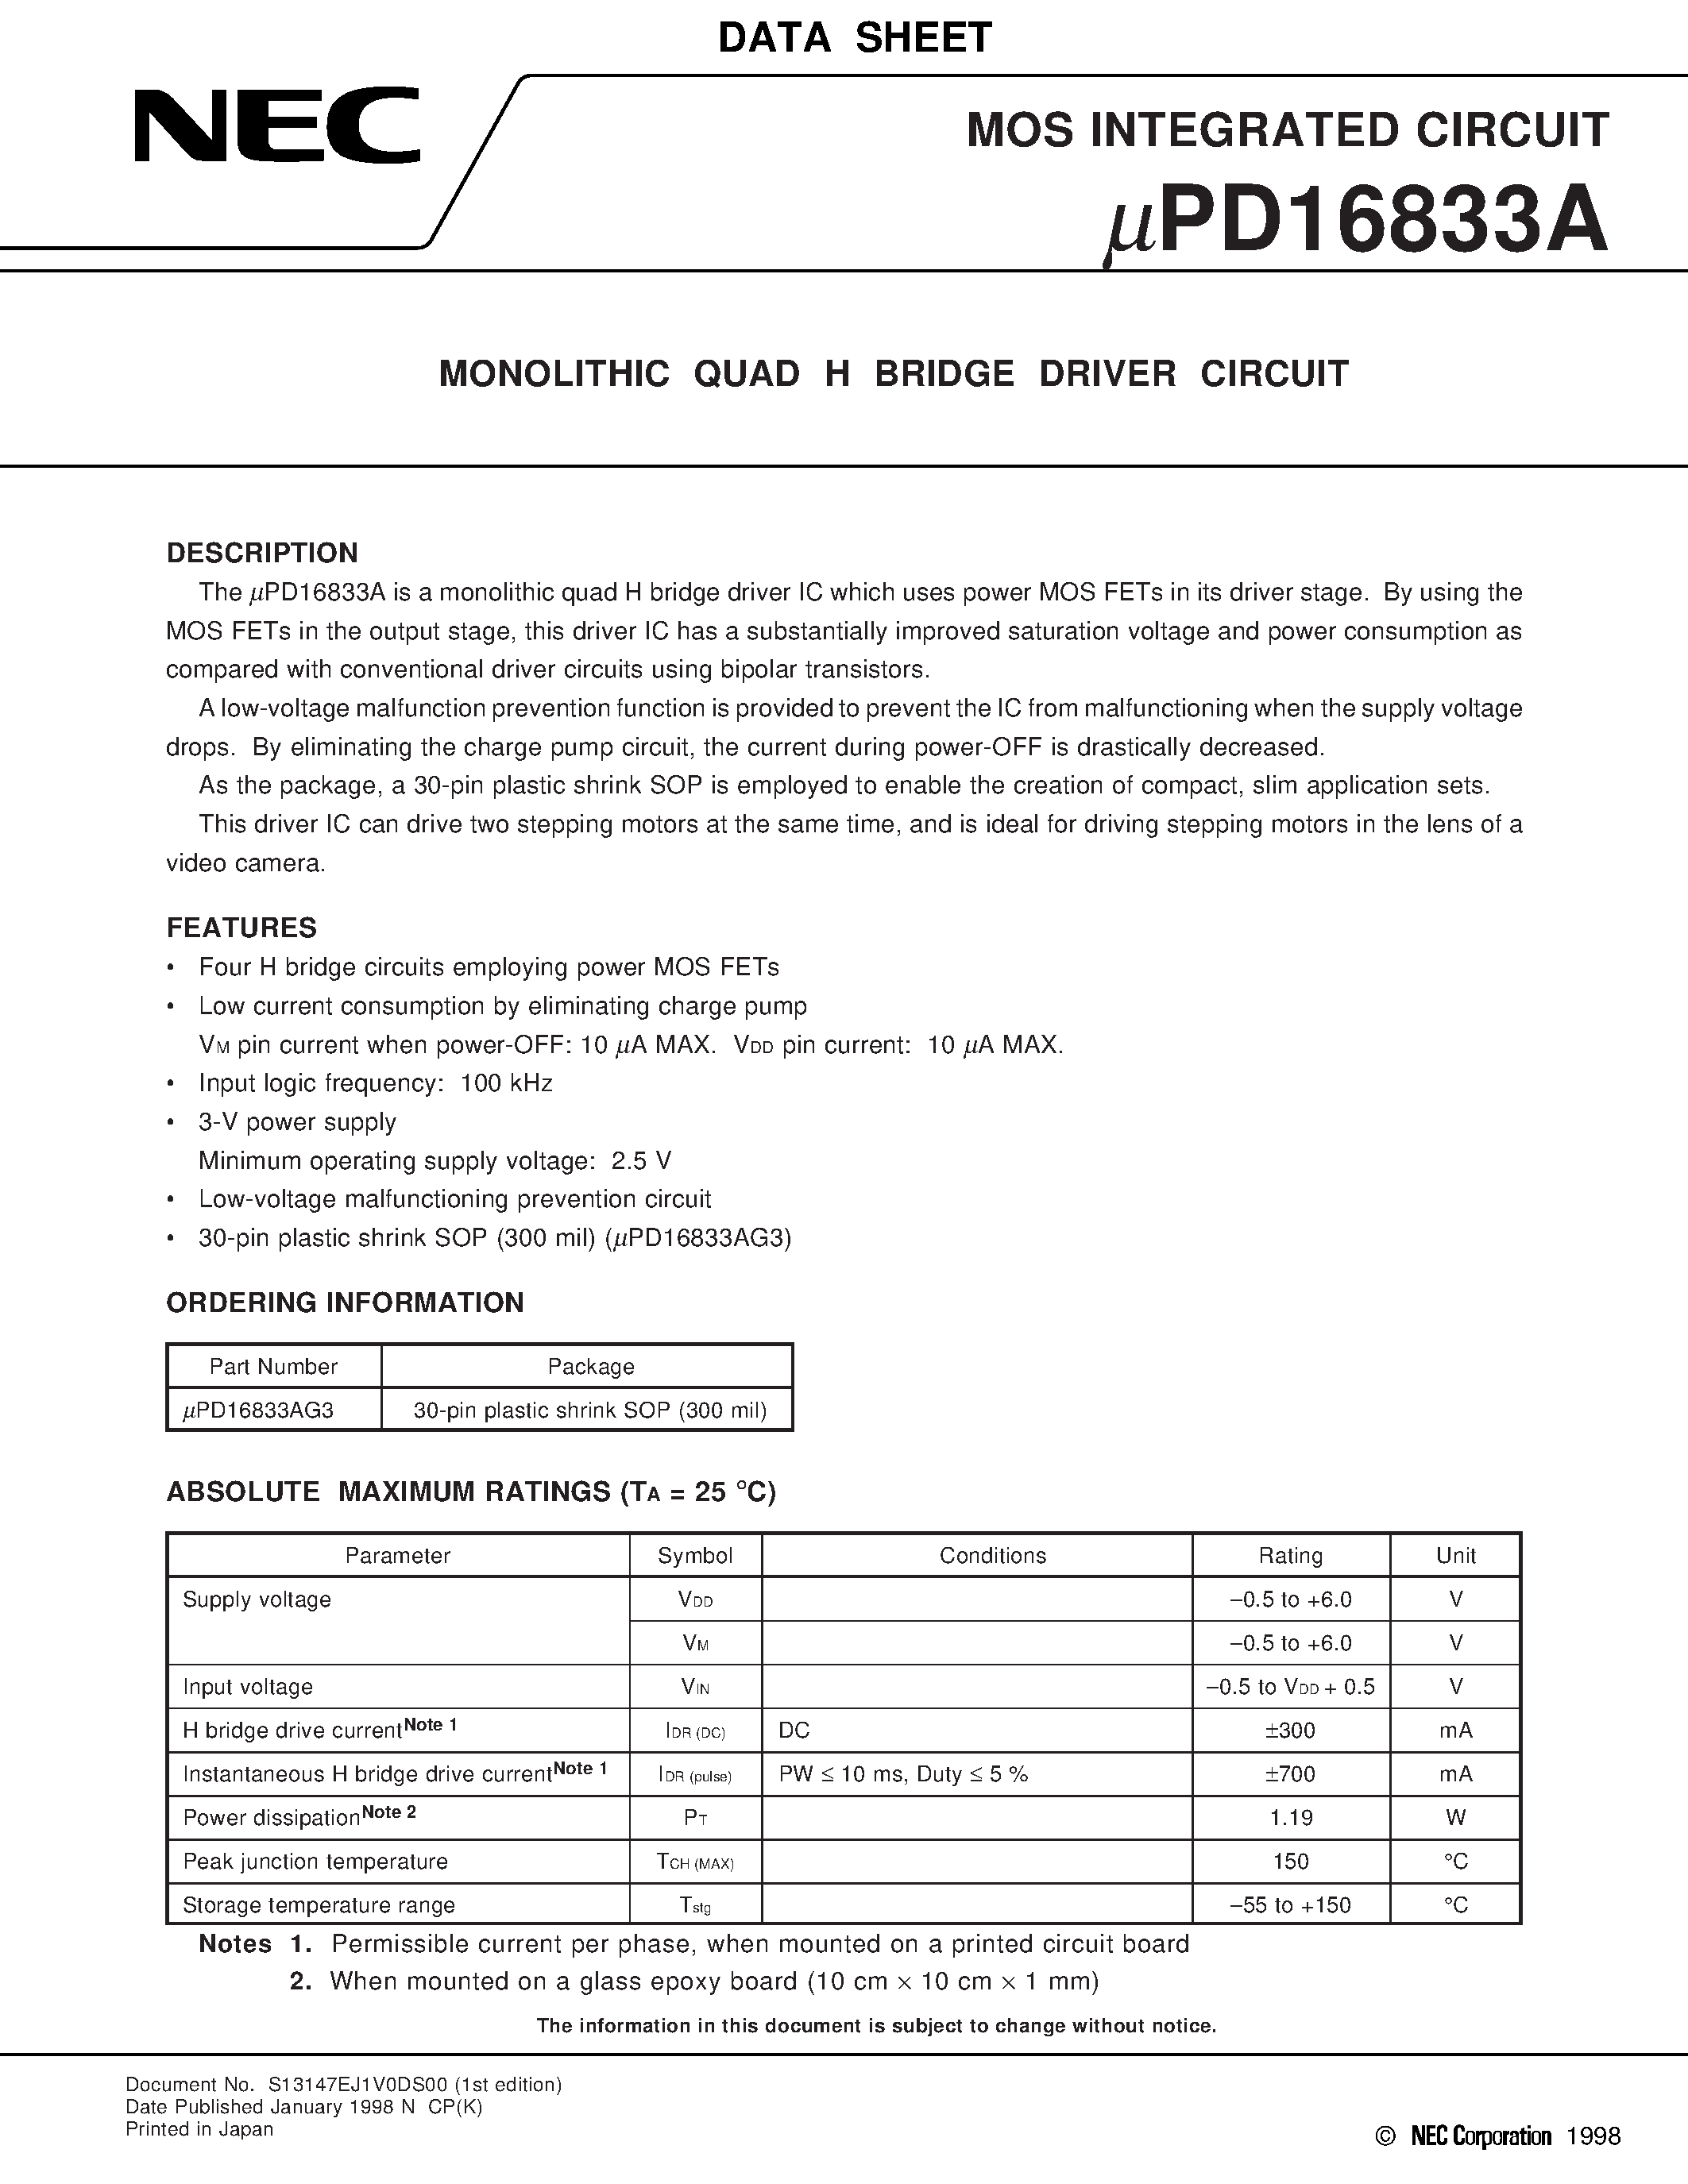 Даташит UPD16833AG3 - MONOLITHIC QUAD H BRIDGE DRIVER CIRCUIT страница 1